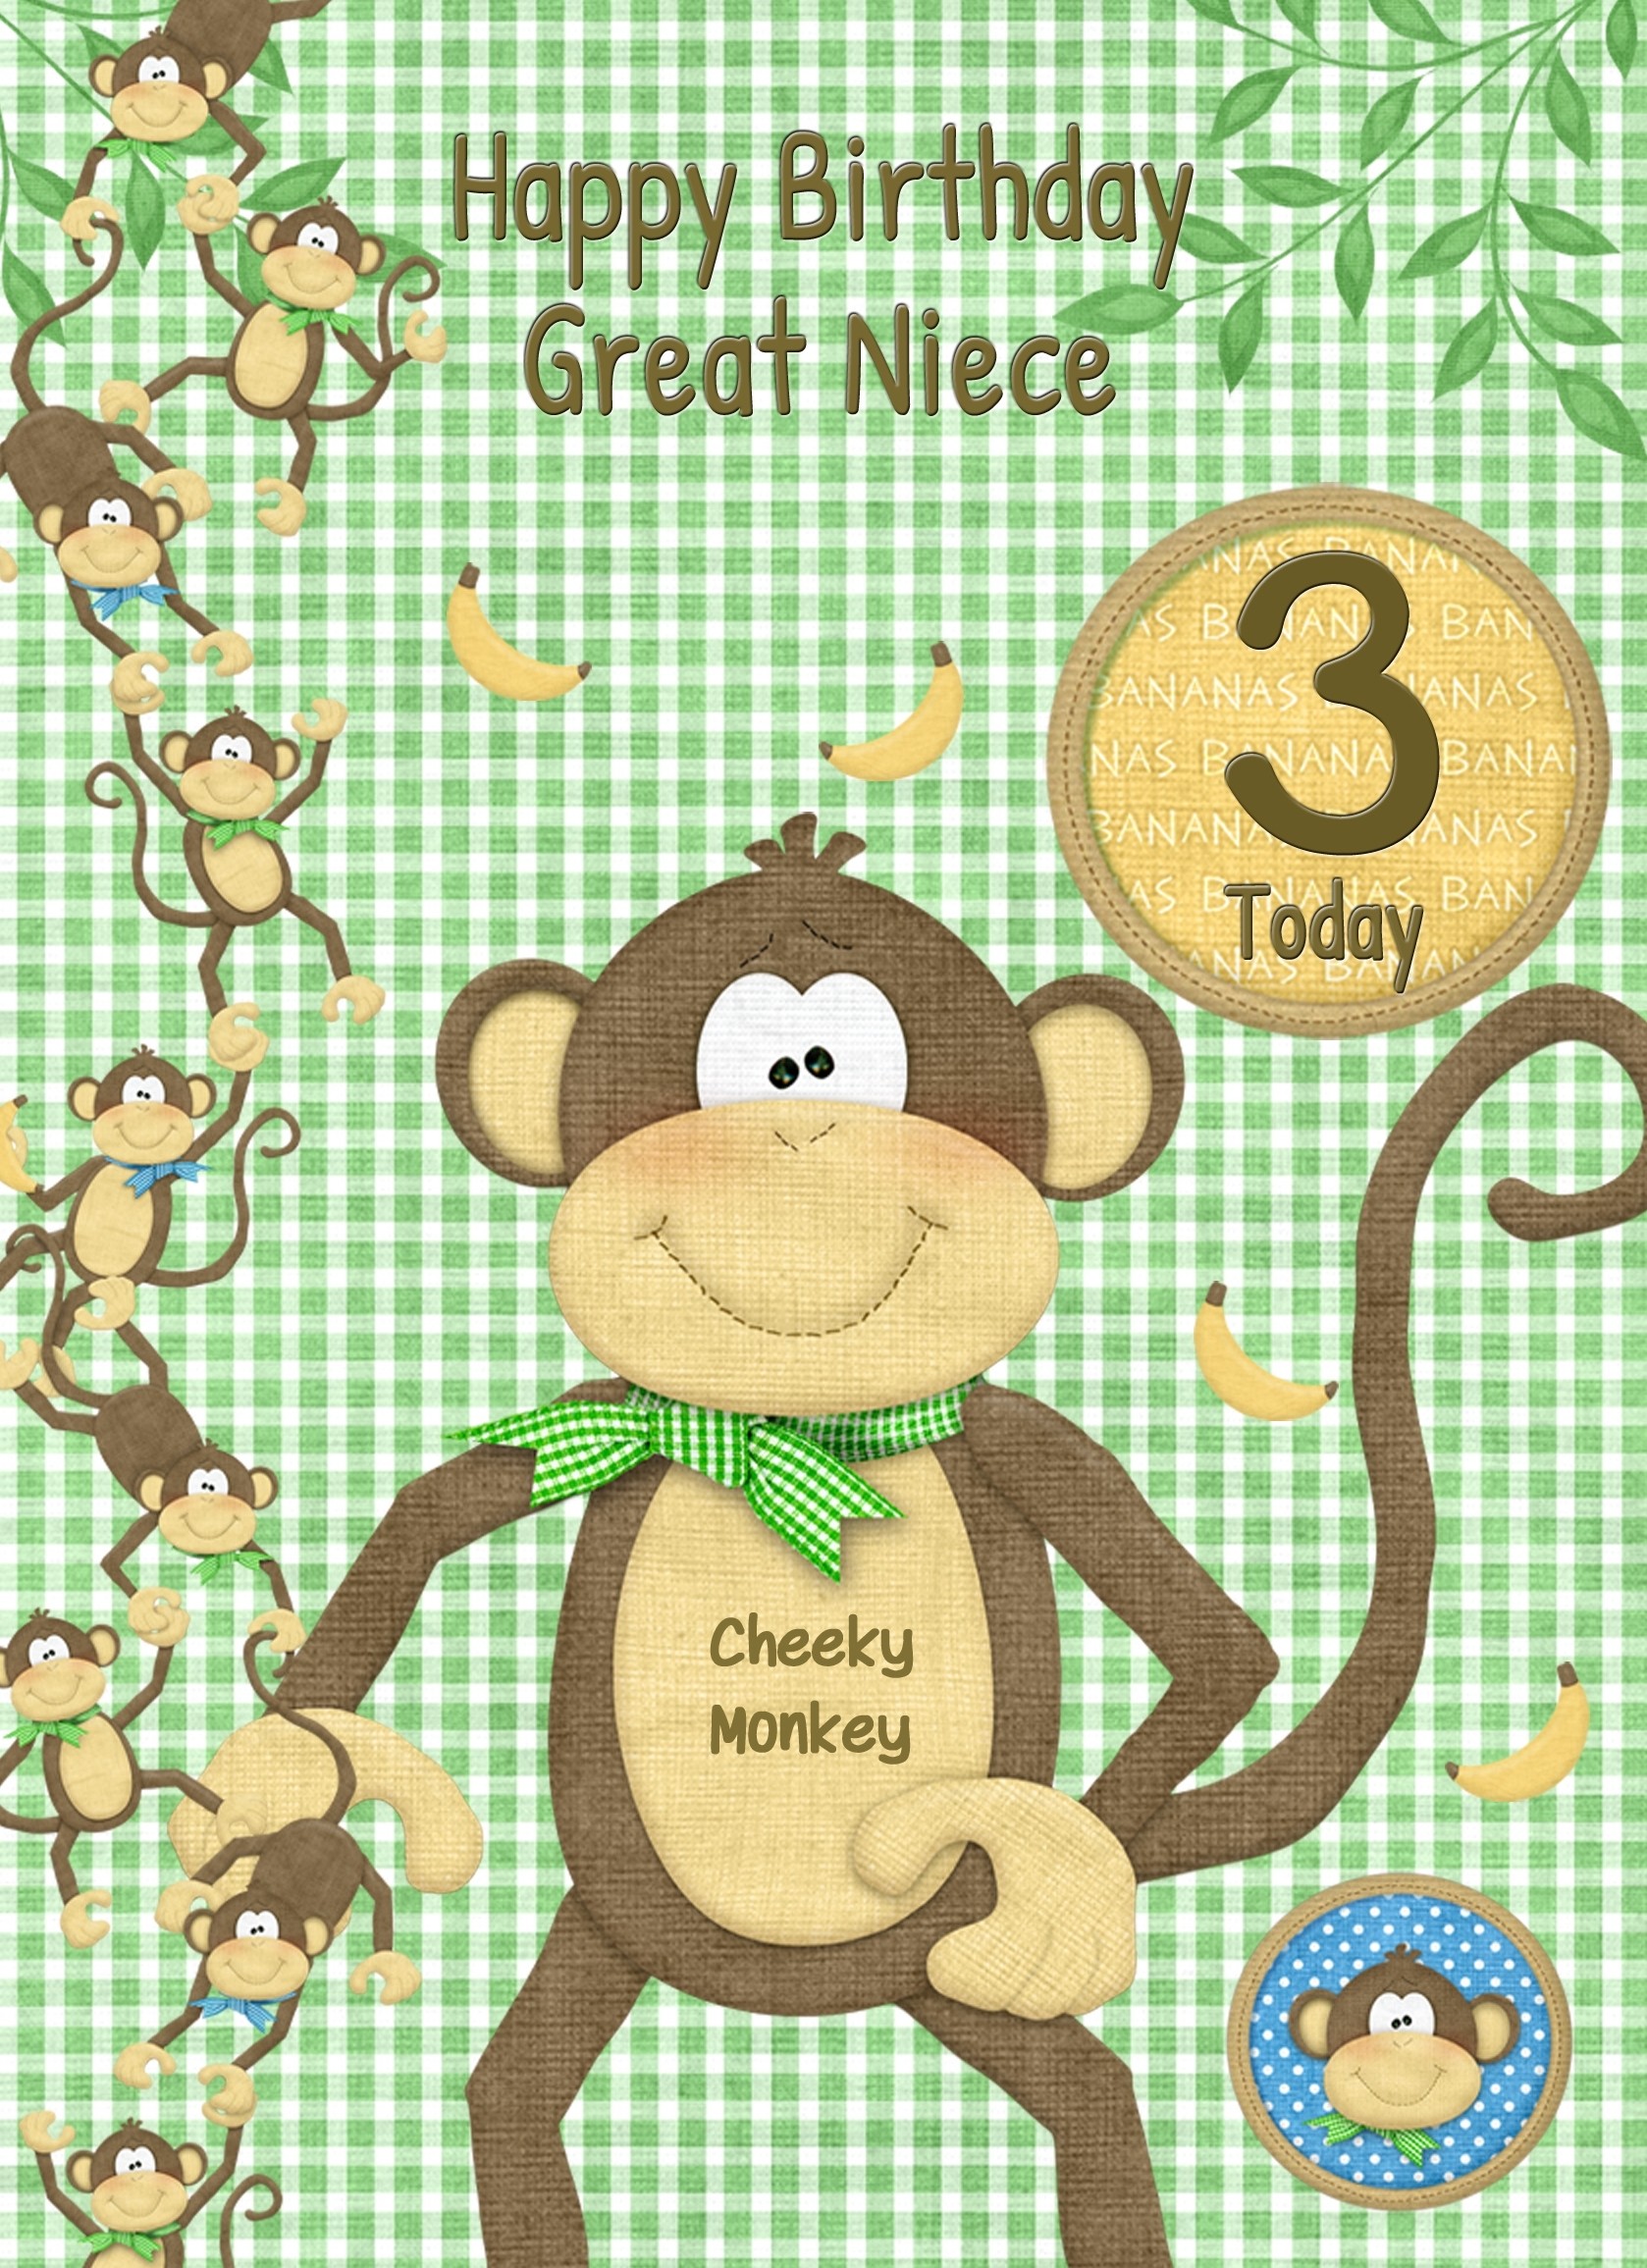 Kids 3rd Birthday Cheeky Monkey Cartoon Card for Great Niece